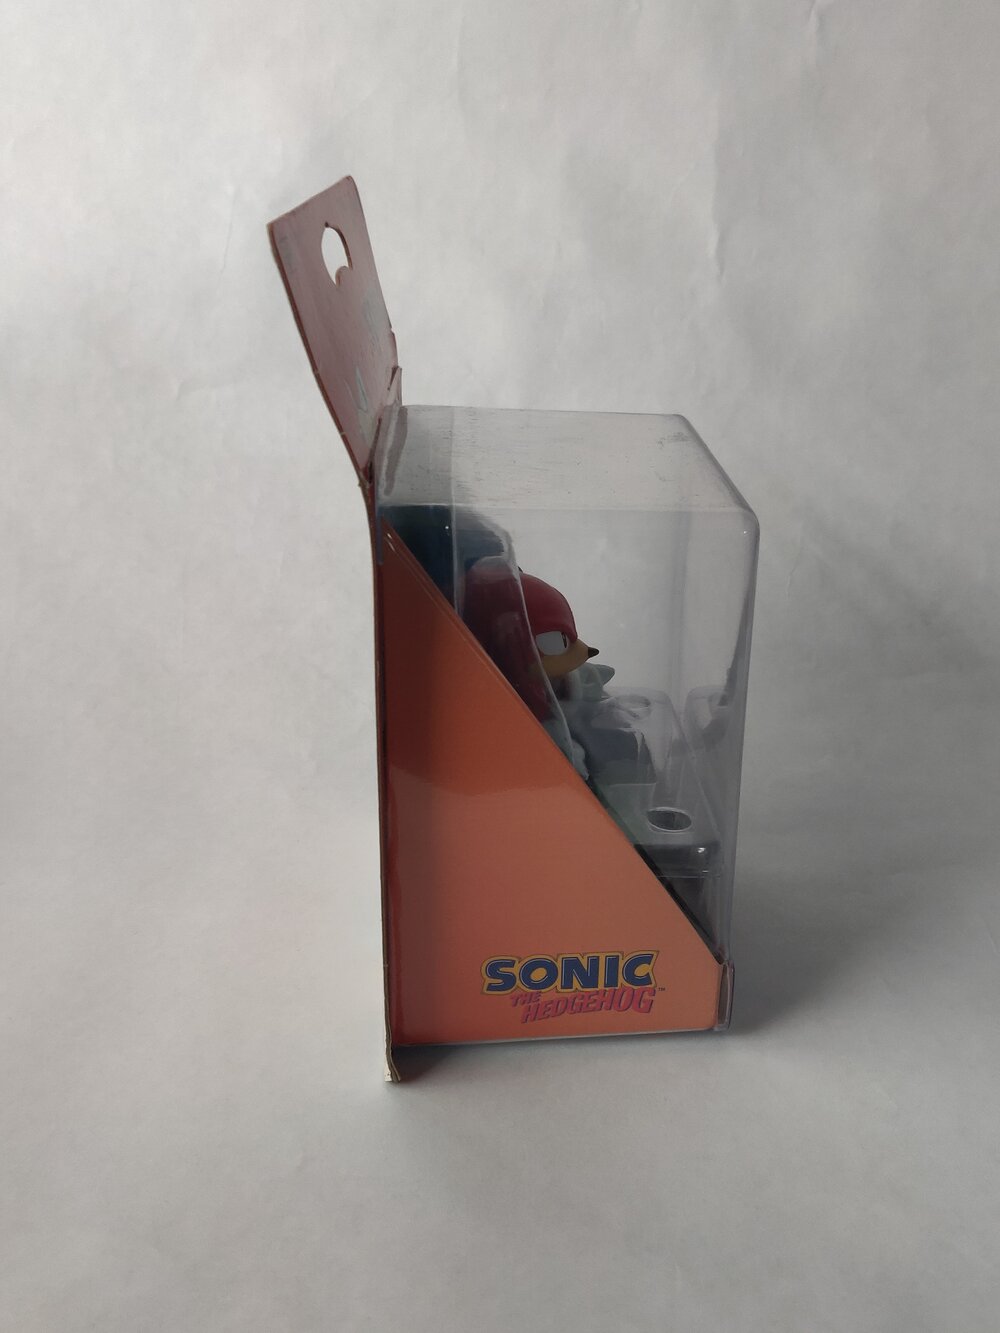 Sonic the Hedgehog Knuckles Totaku Collectible Vinyl Figure